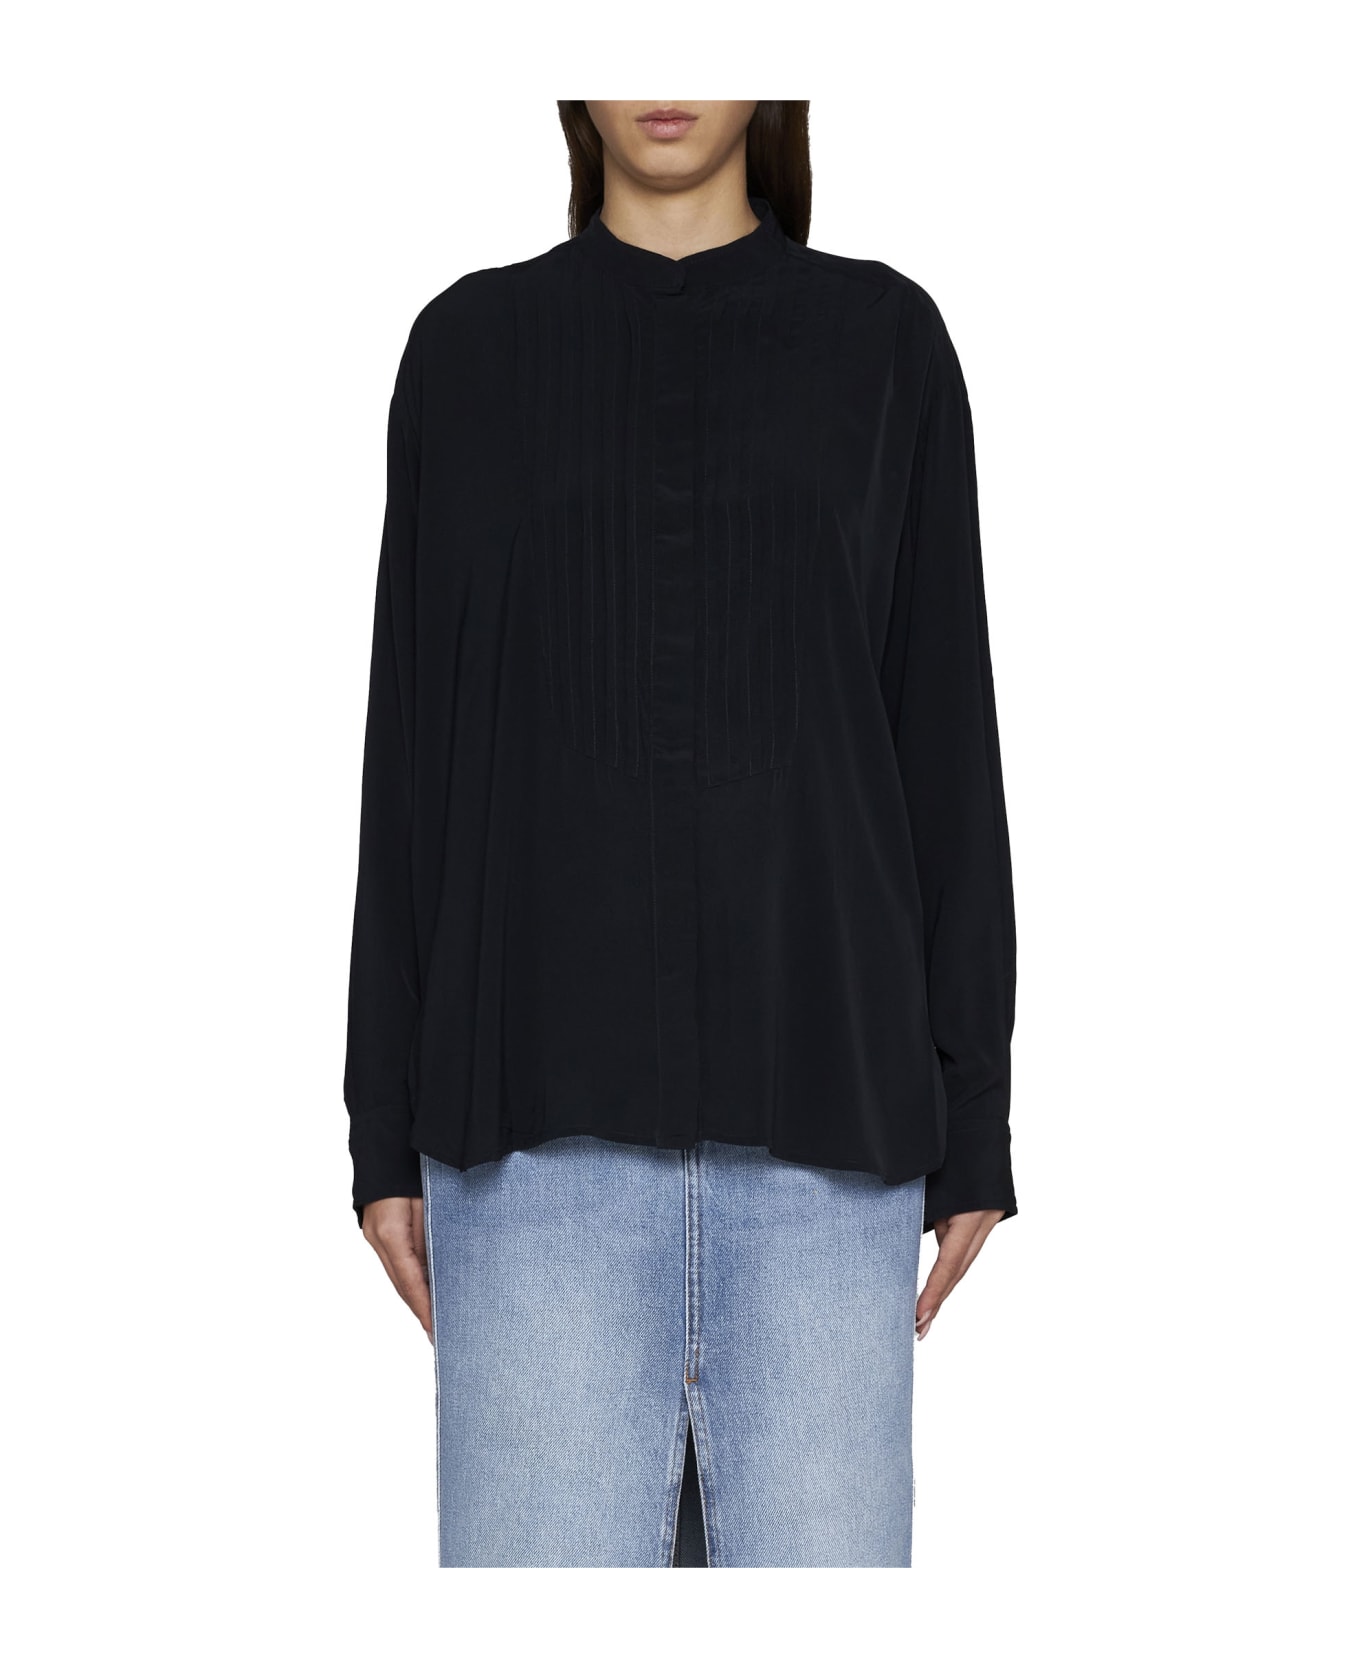 Isabel Marant Shirt - Black